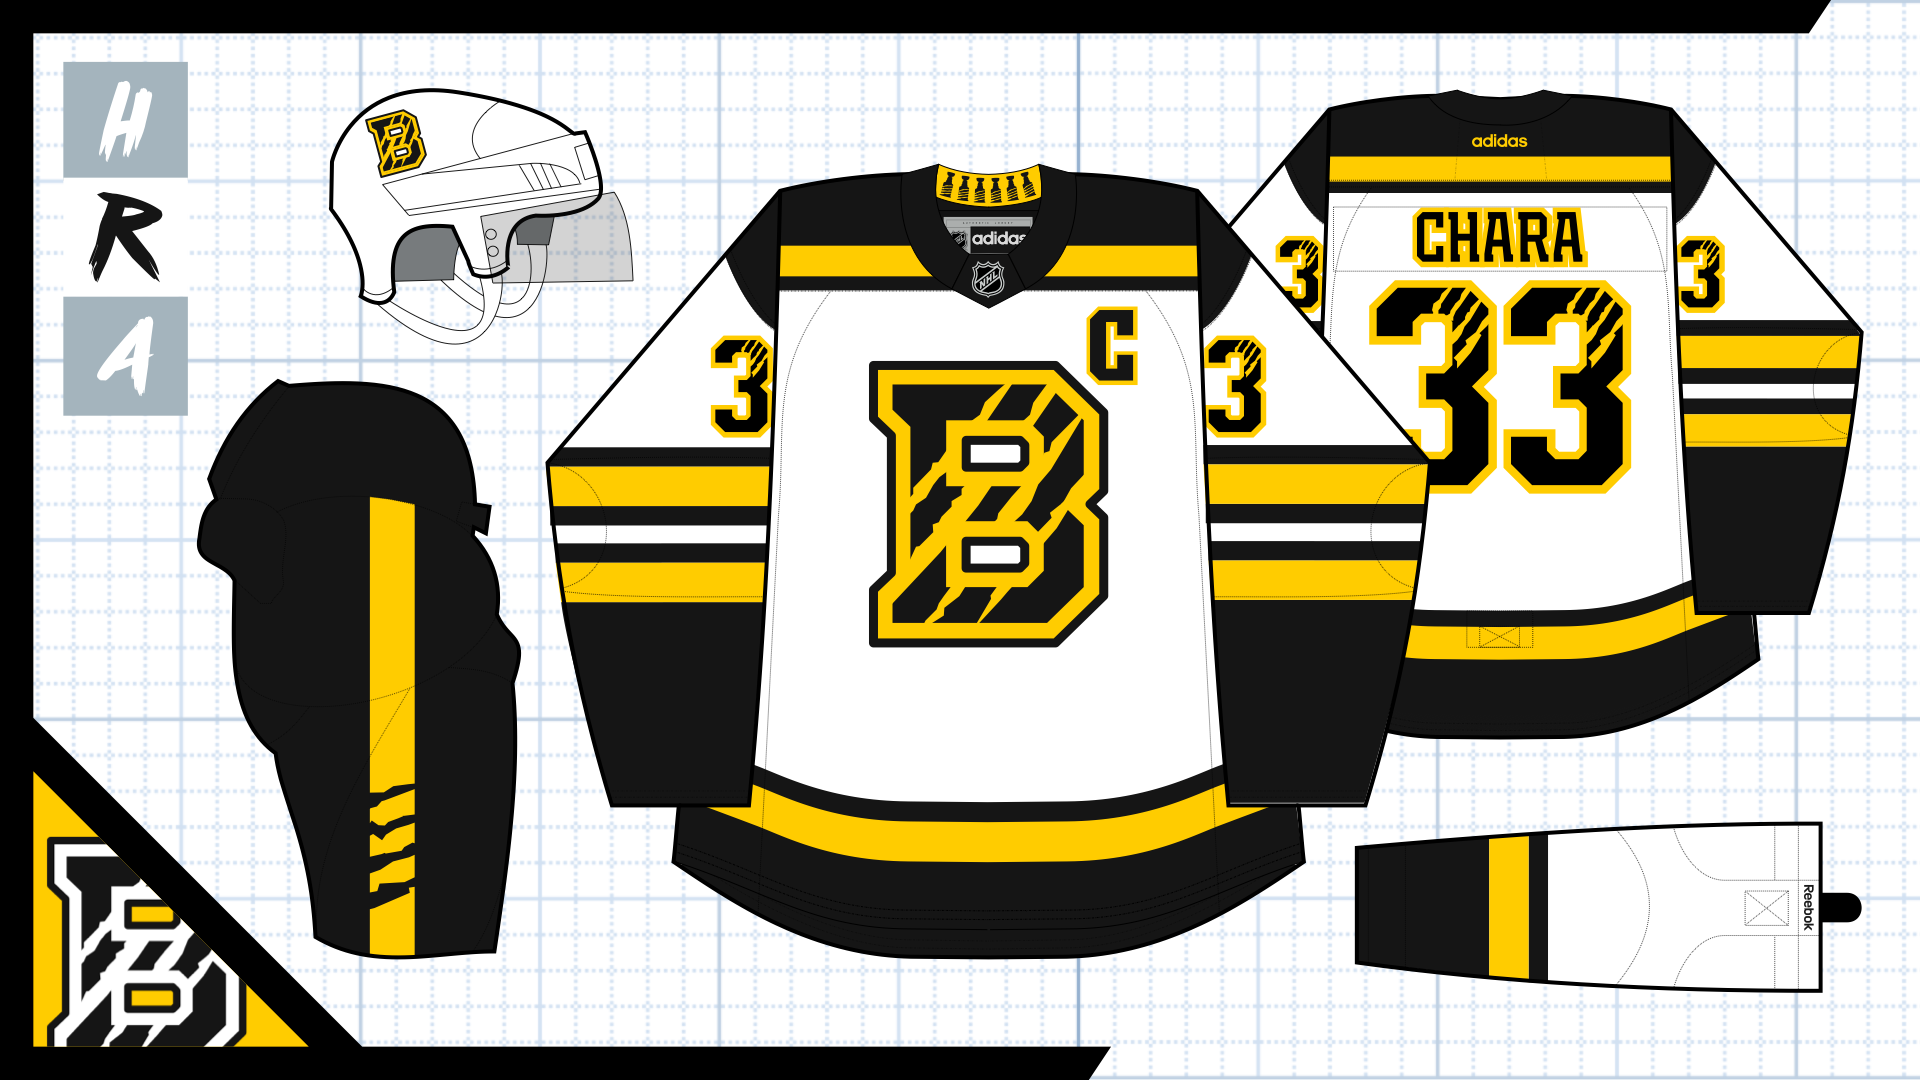 A new bear for the Boston Bruins - Concepts - Chris Creamer's Sports Logos  Community - CCSLC - SportsLogos.Net Forums